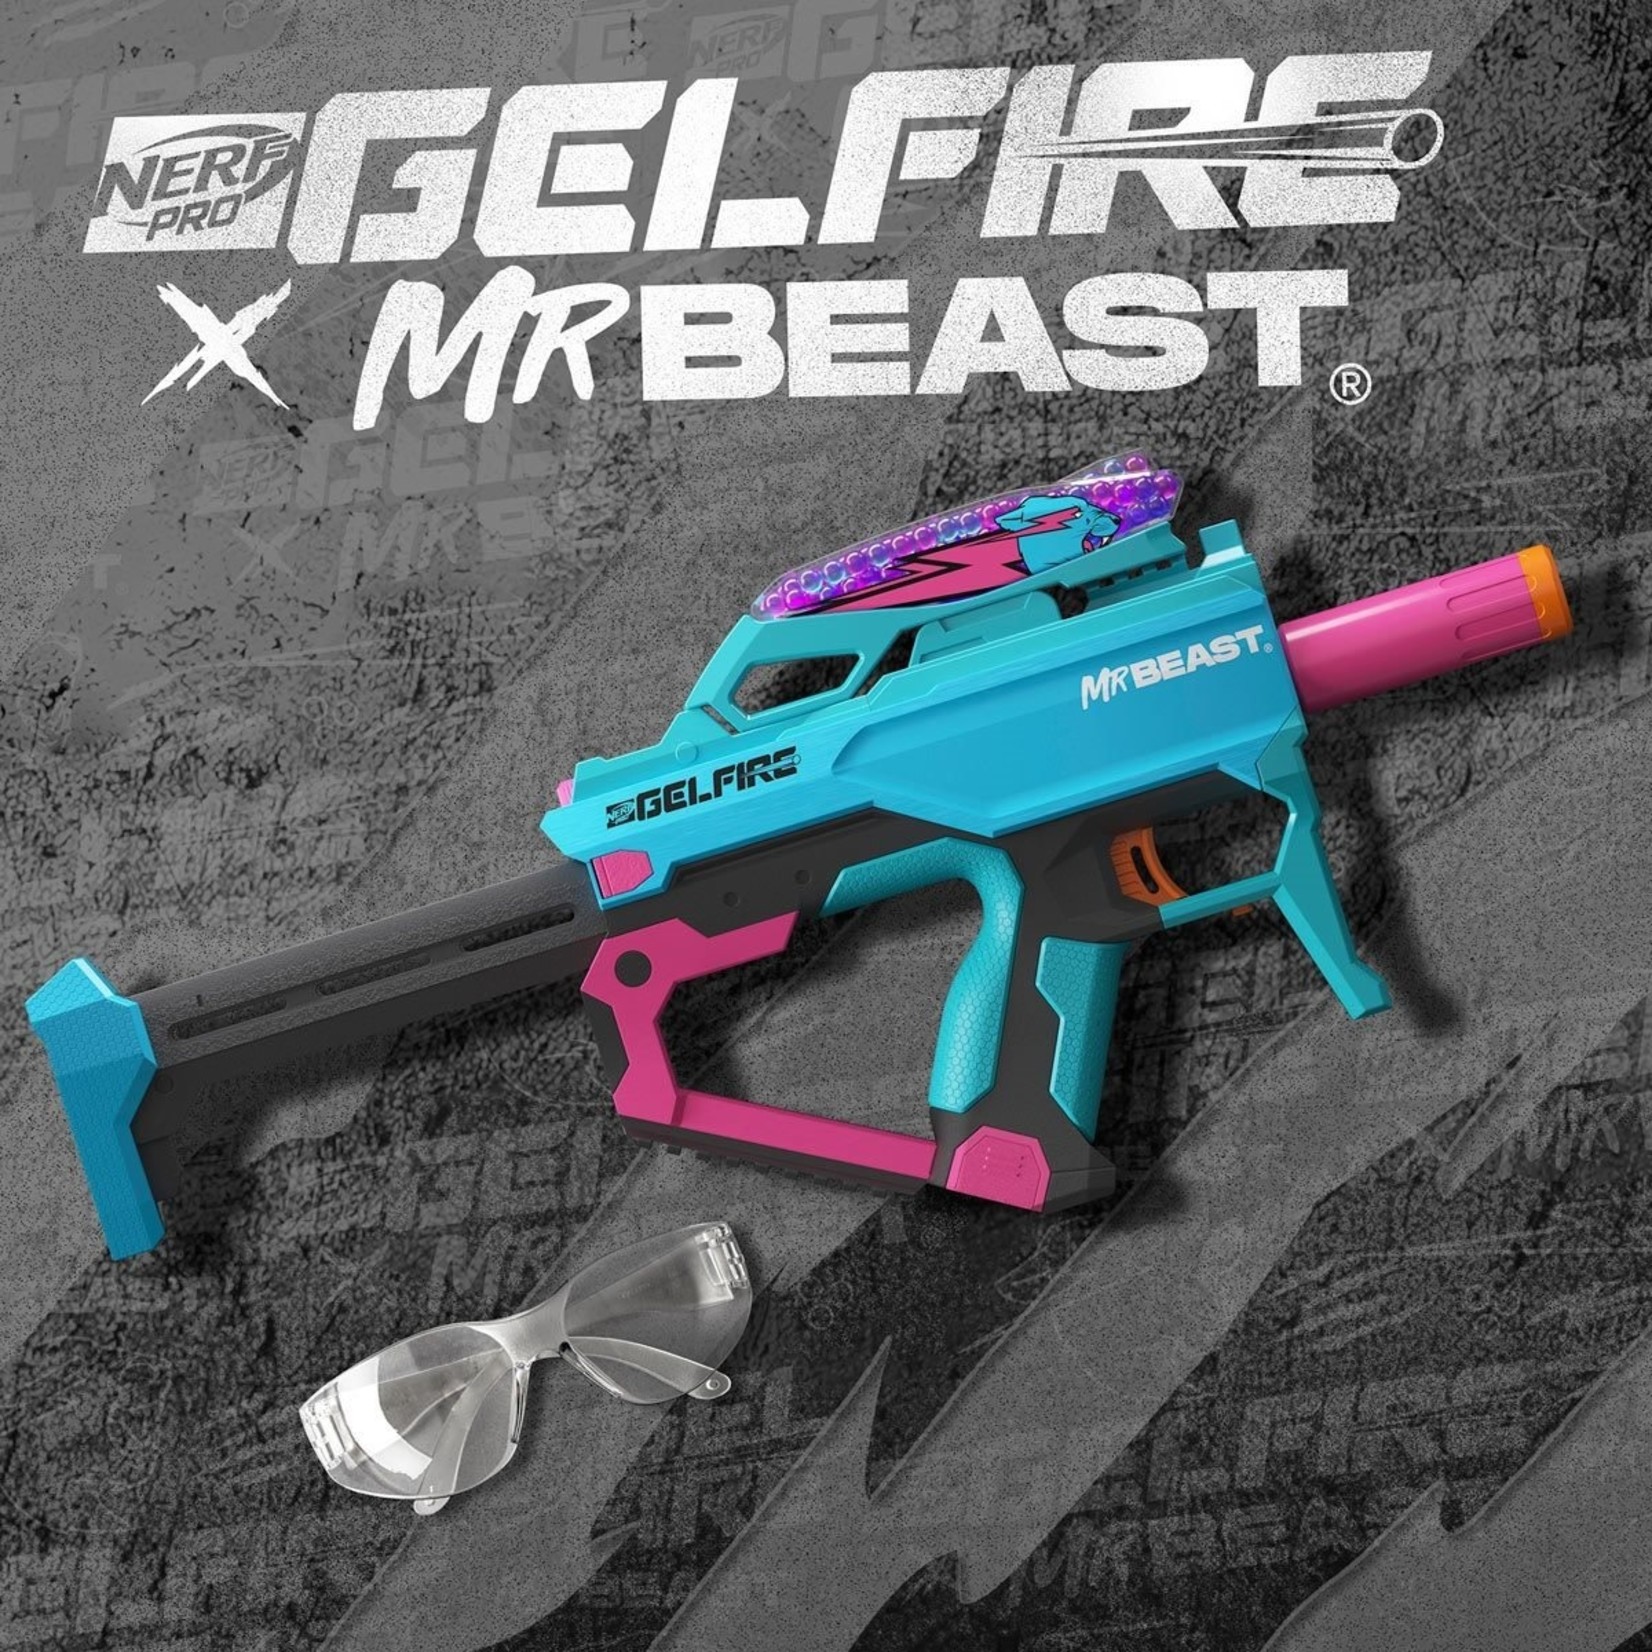 NERF Pro Gelfire X Mr Beast Blaster